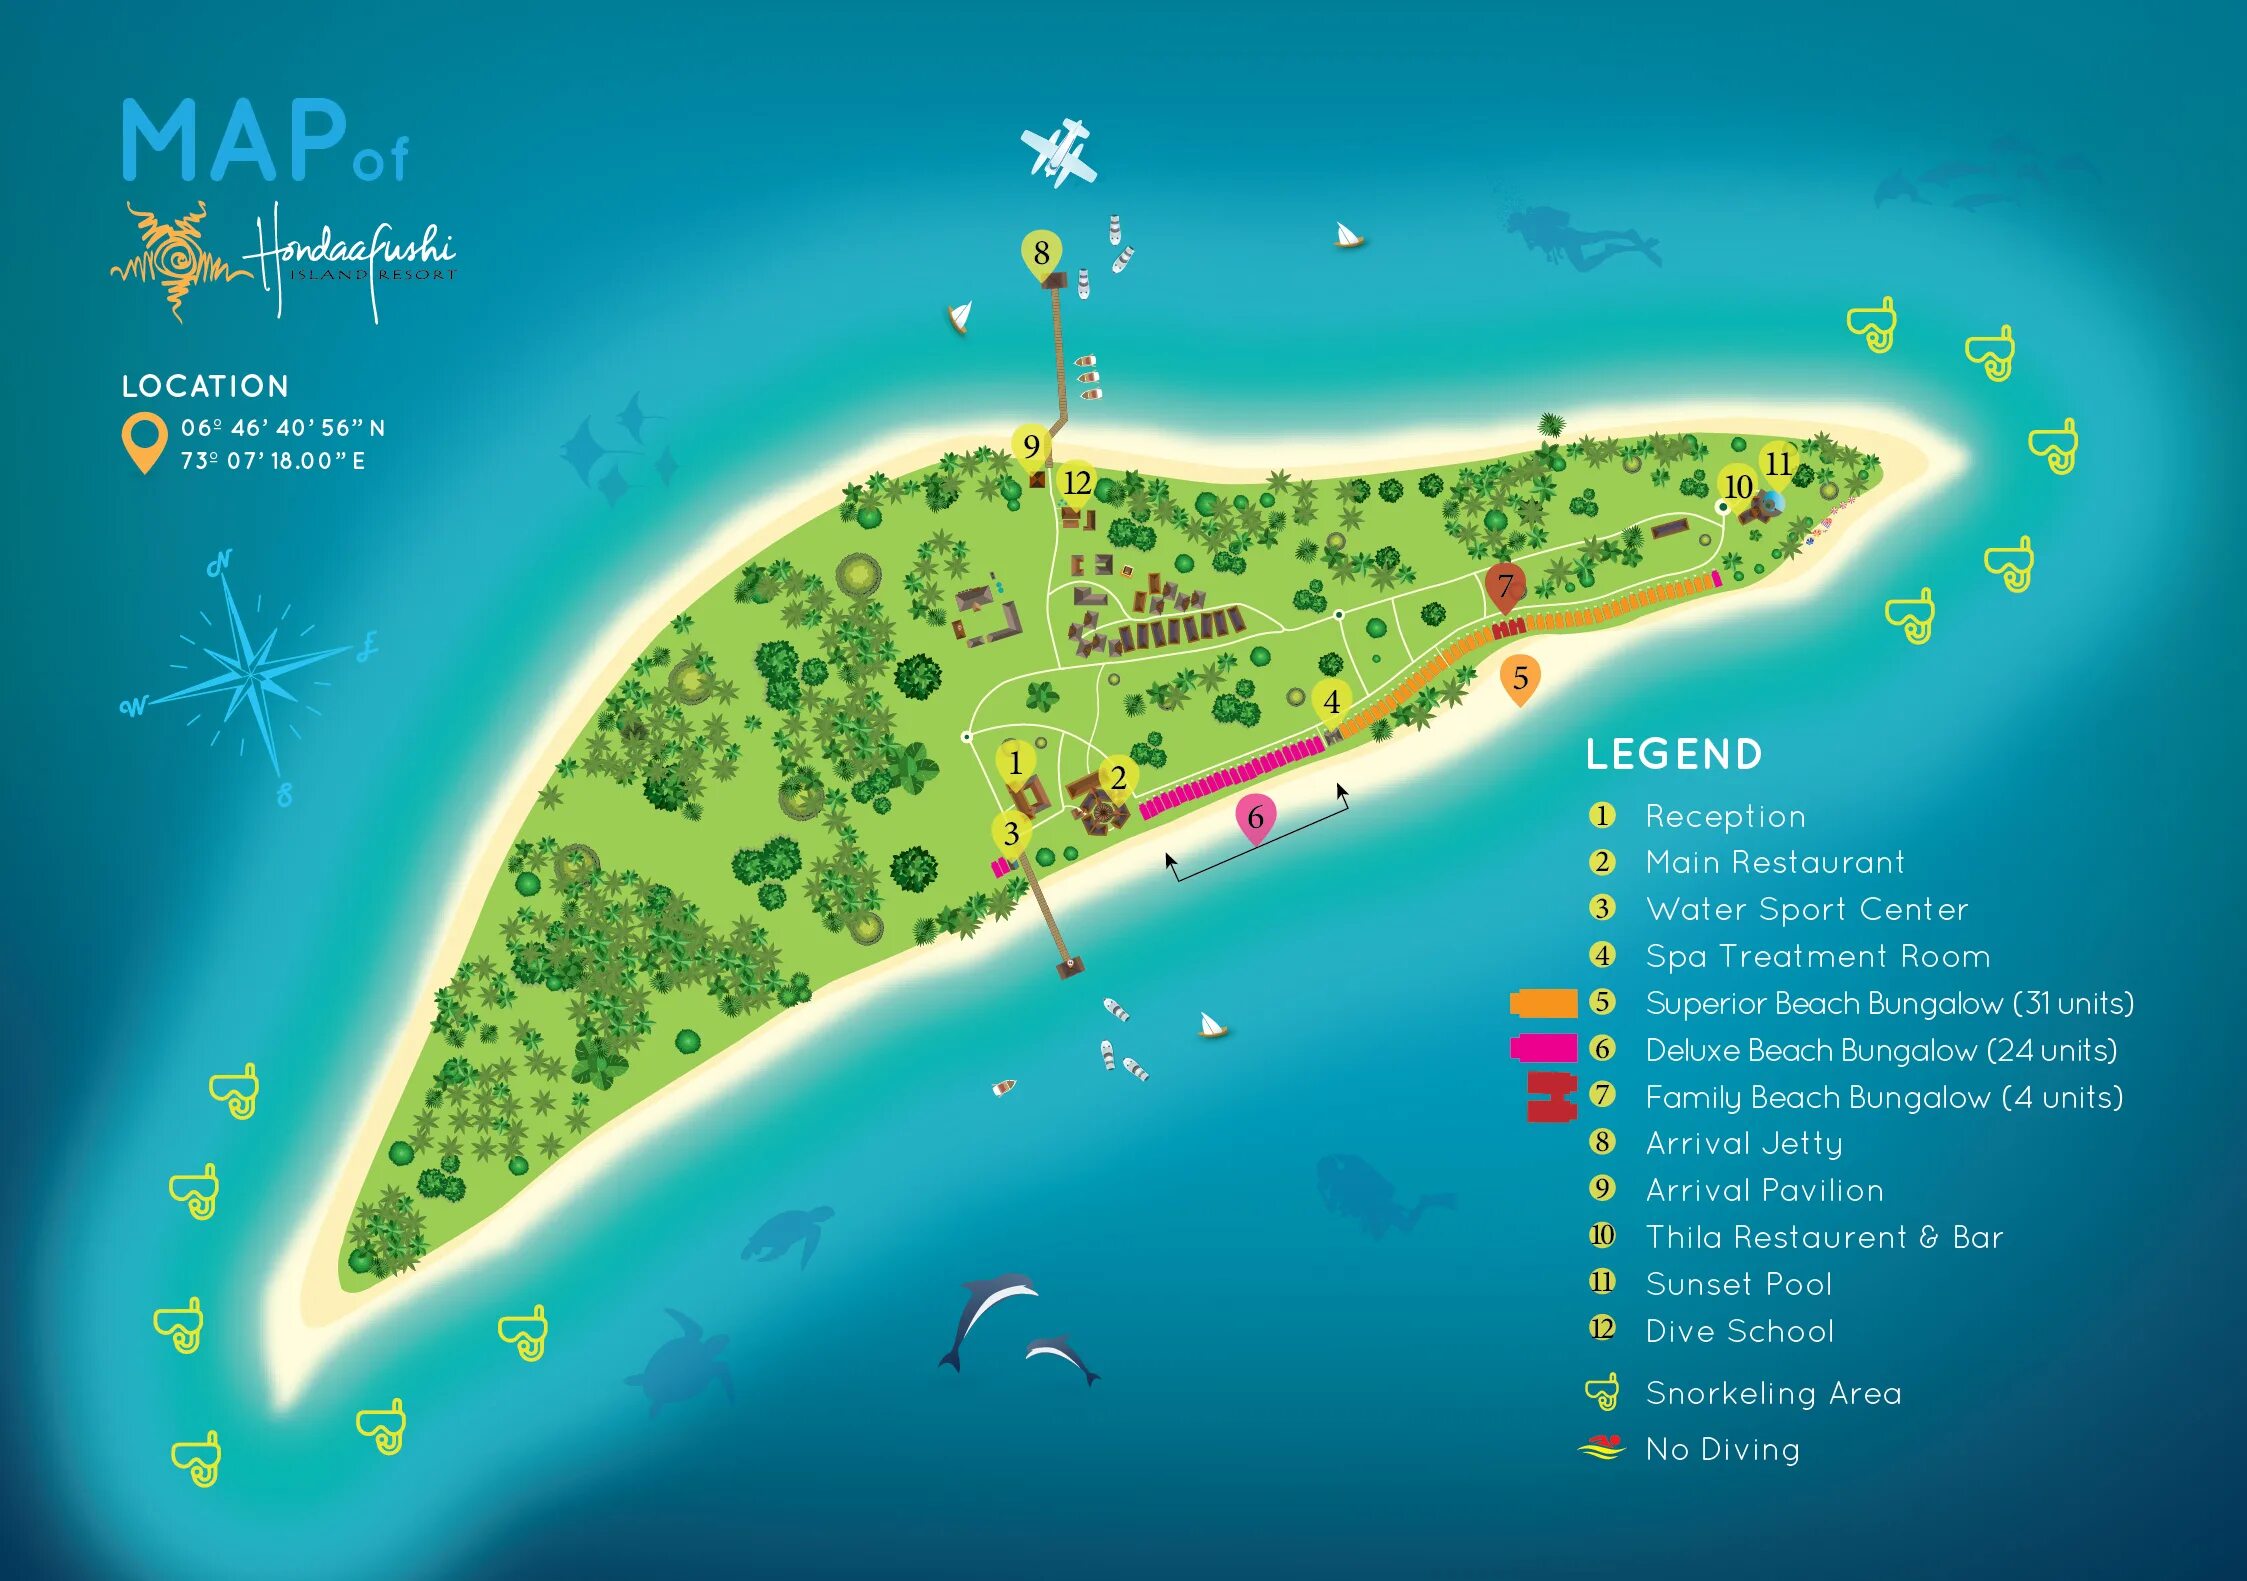 Hondaafushi island 4. Отель Hondaafushi Island Resort. Hondaafushi Island Resort 4 карта отеля. Meeru Island Resort карта отеля. Meeru Island Resort 4 карта острова.